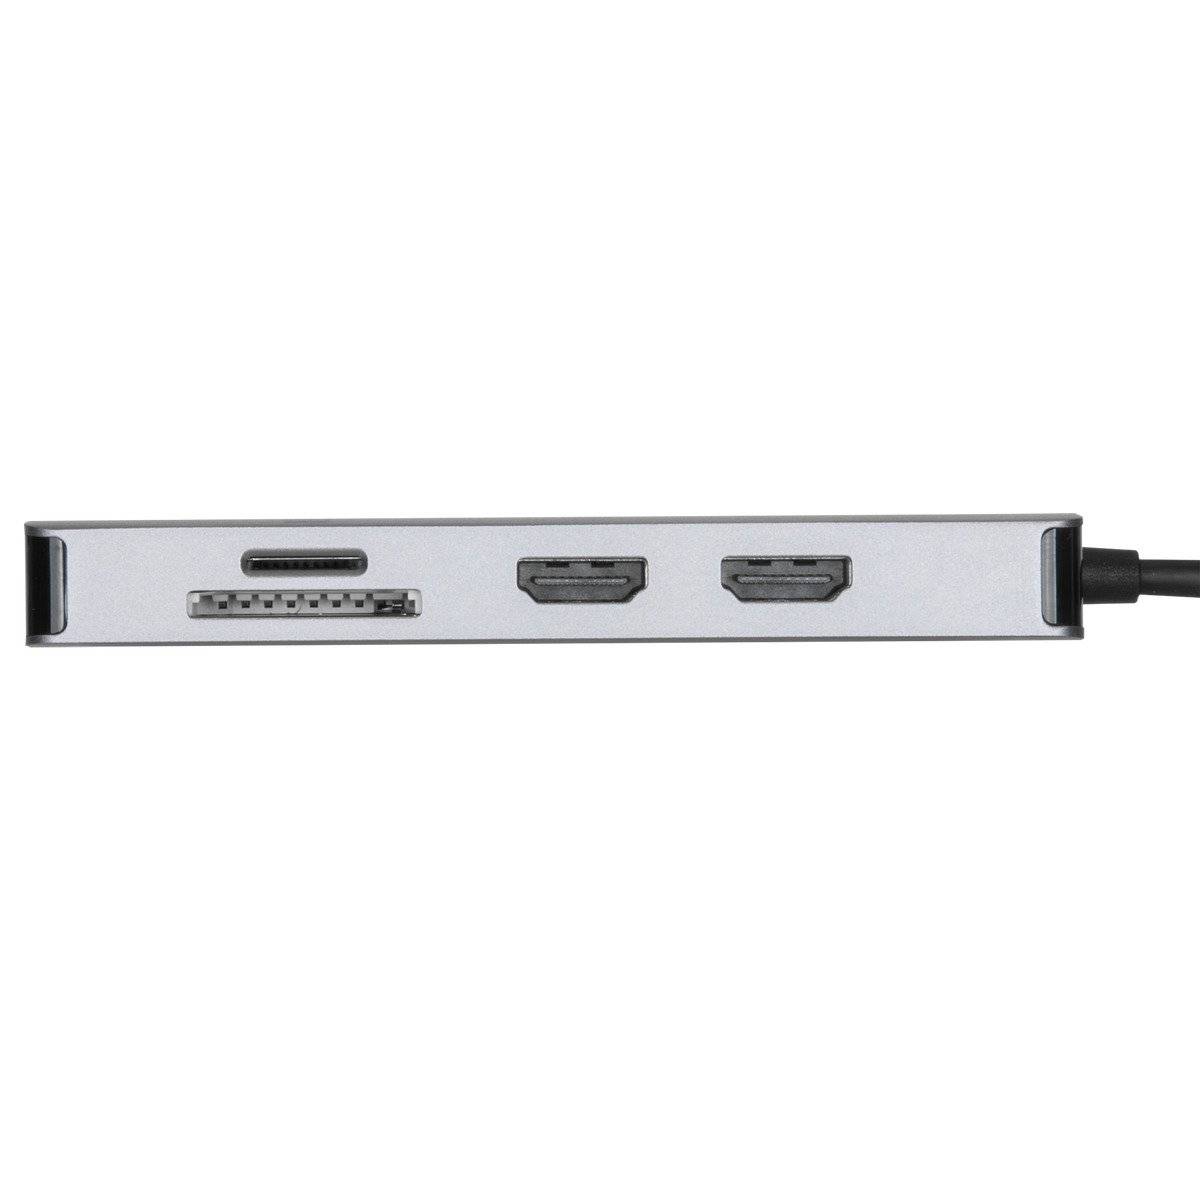 Rca Informatique - image du produit : USB-C UNIVERSAL DUAL HDMI 4K DOCKING STATION 100W